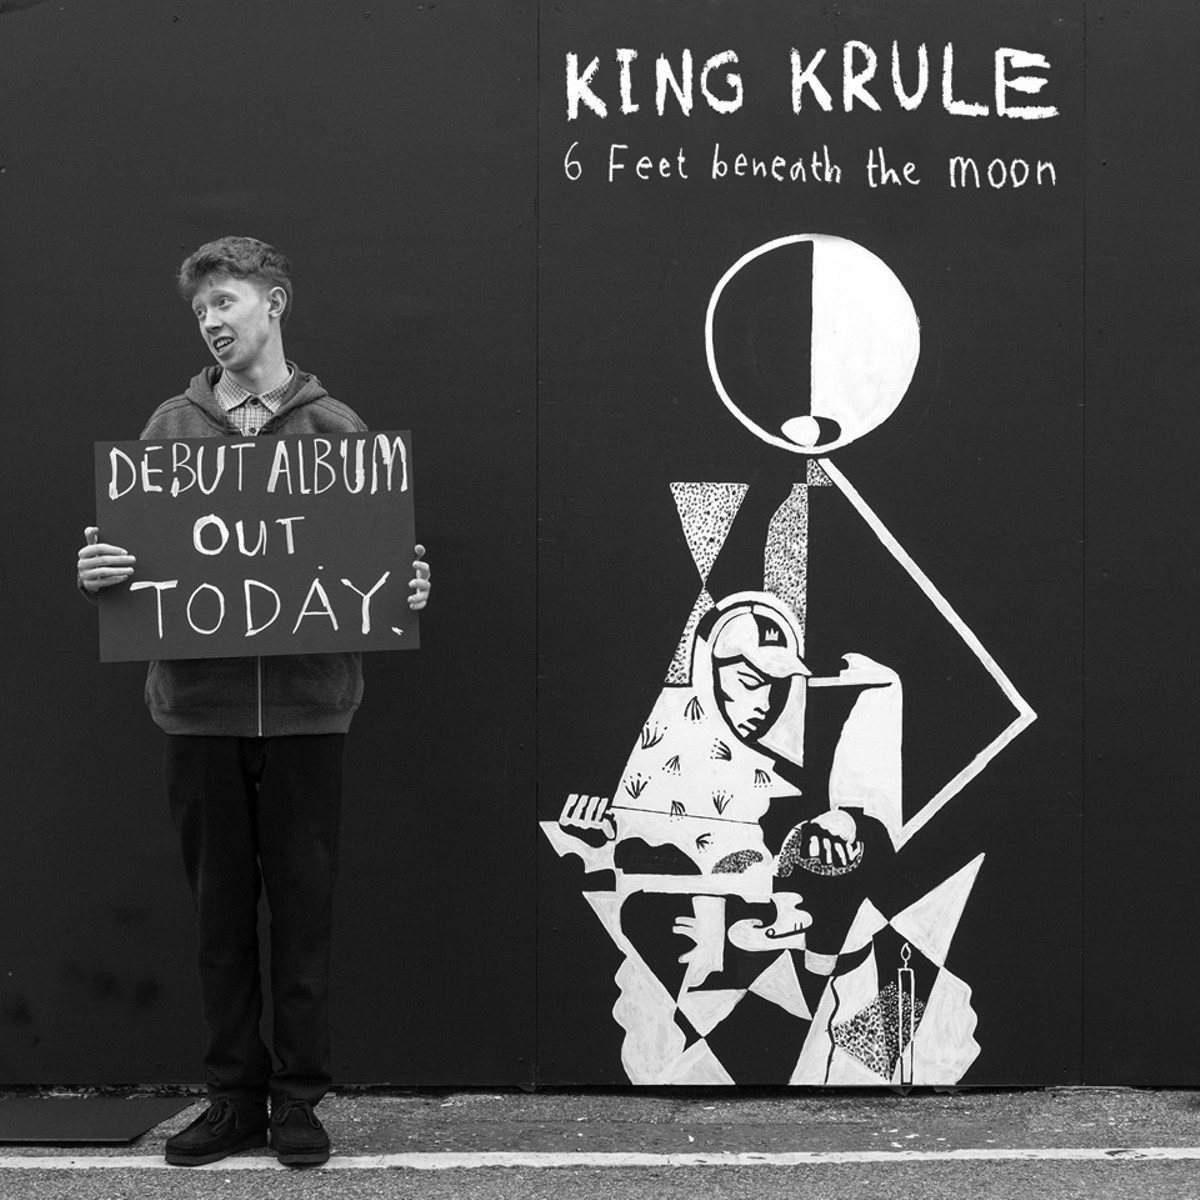 Beneath the moon. King Krule 6 feet beneath the Moon. King Krule. King Krule альбом. King Krule "Ooz".